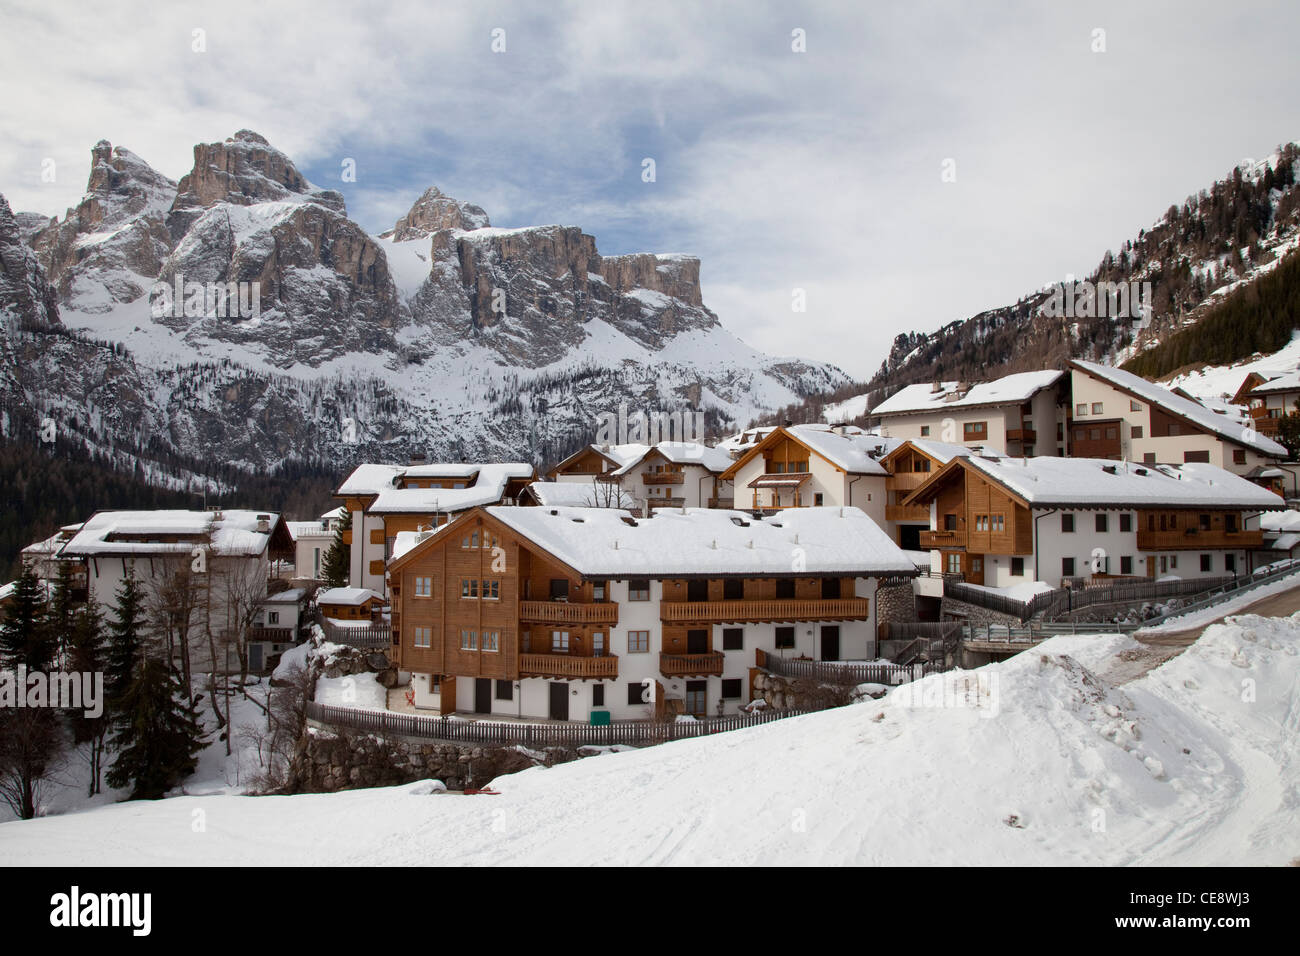 Kolfuschg in front of Sella massif, Colfosco, Gader valley, Val Badia, Dolomites, South Tyrol Italy, Europe Stock Photo